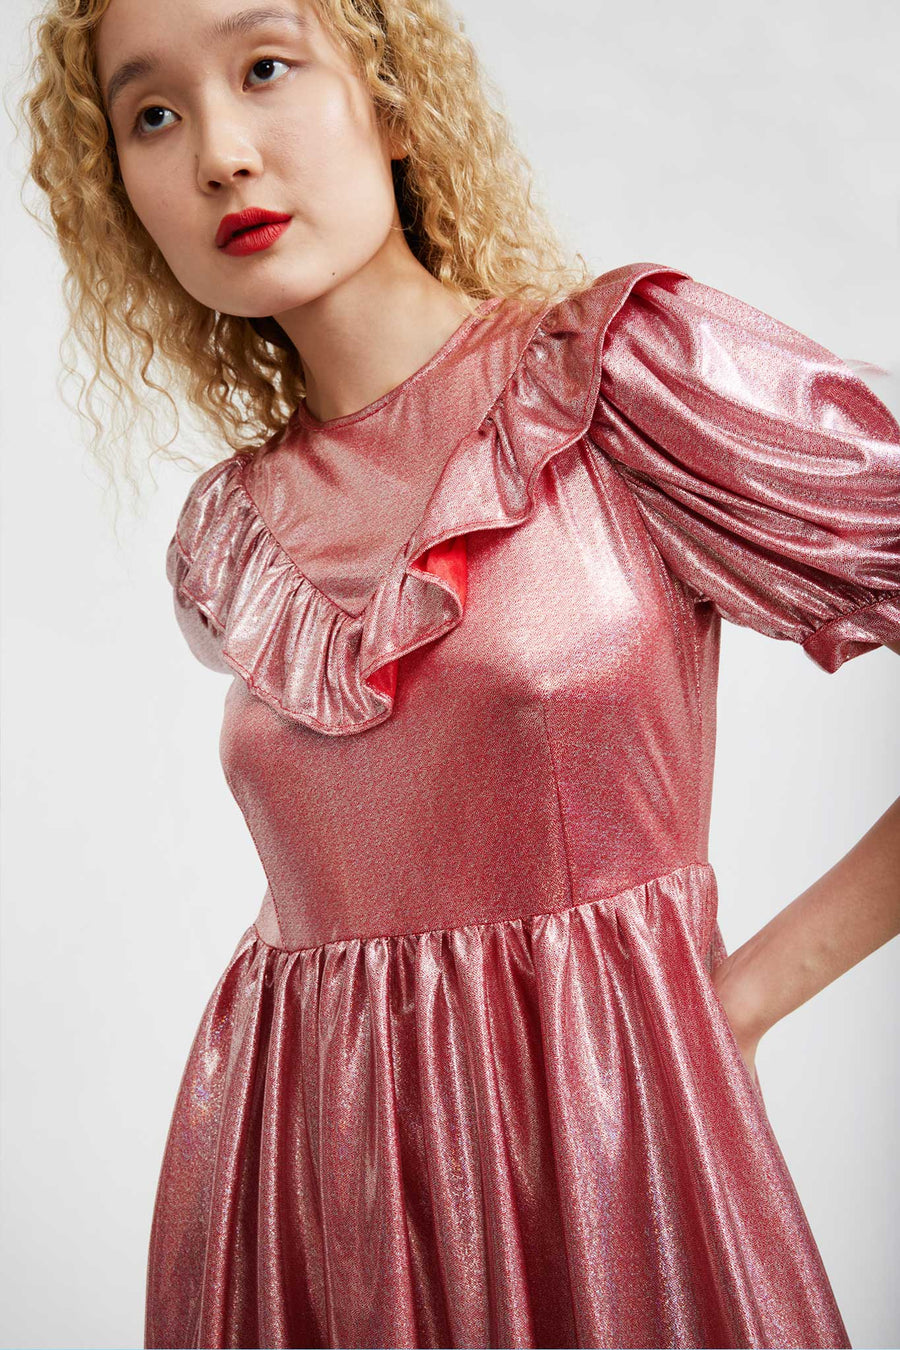 BATSHEVA - May Dress in Ballerina Pink Holographic